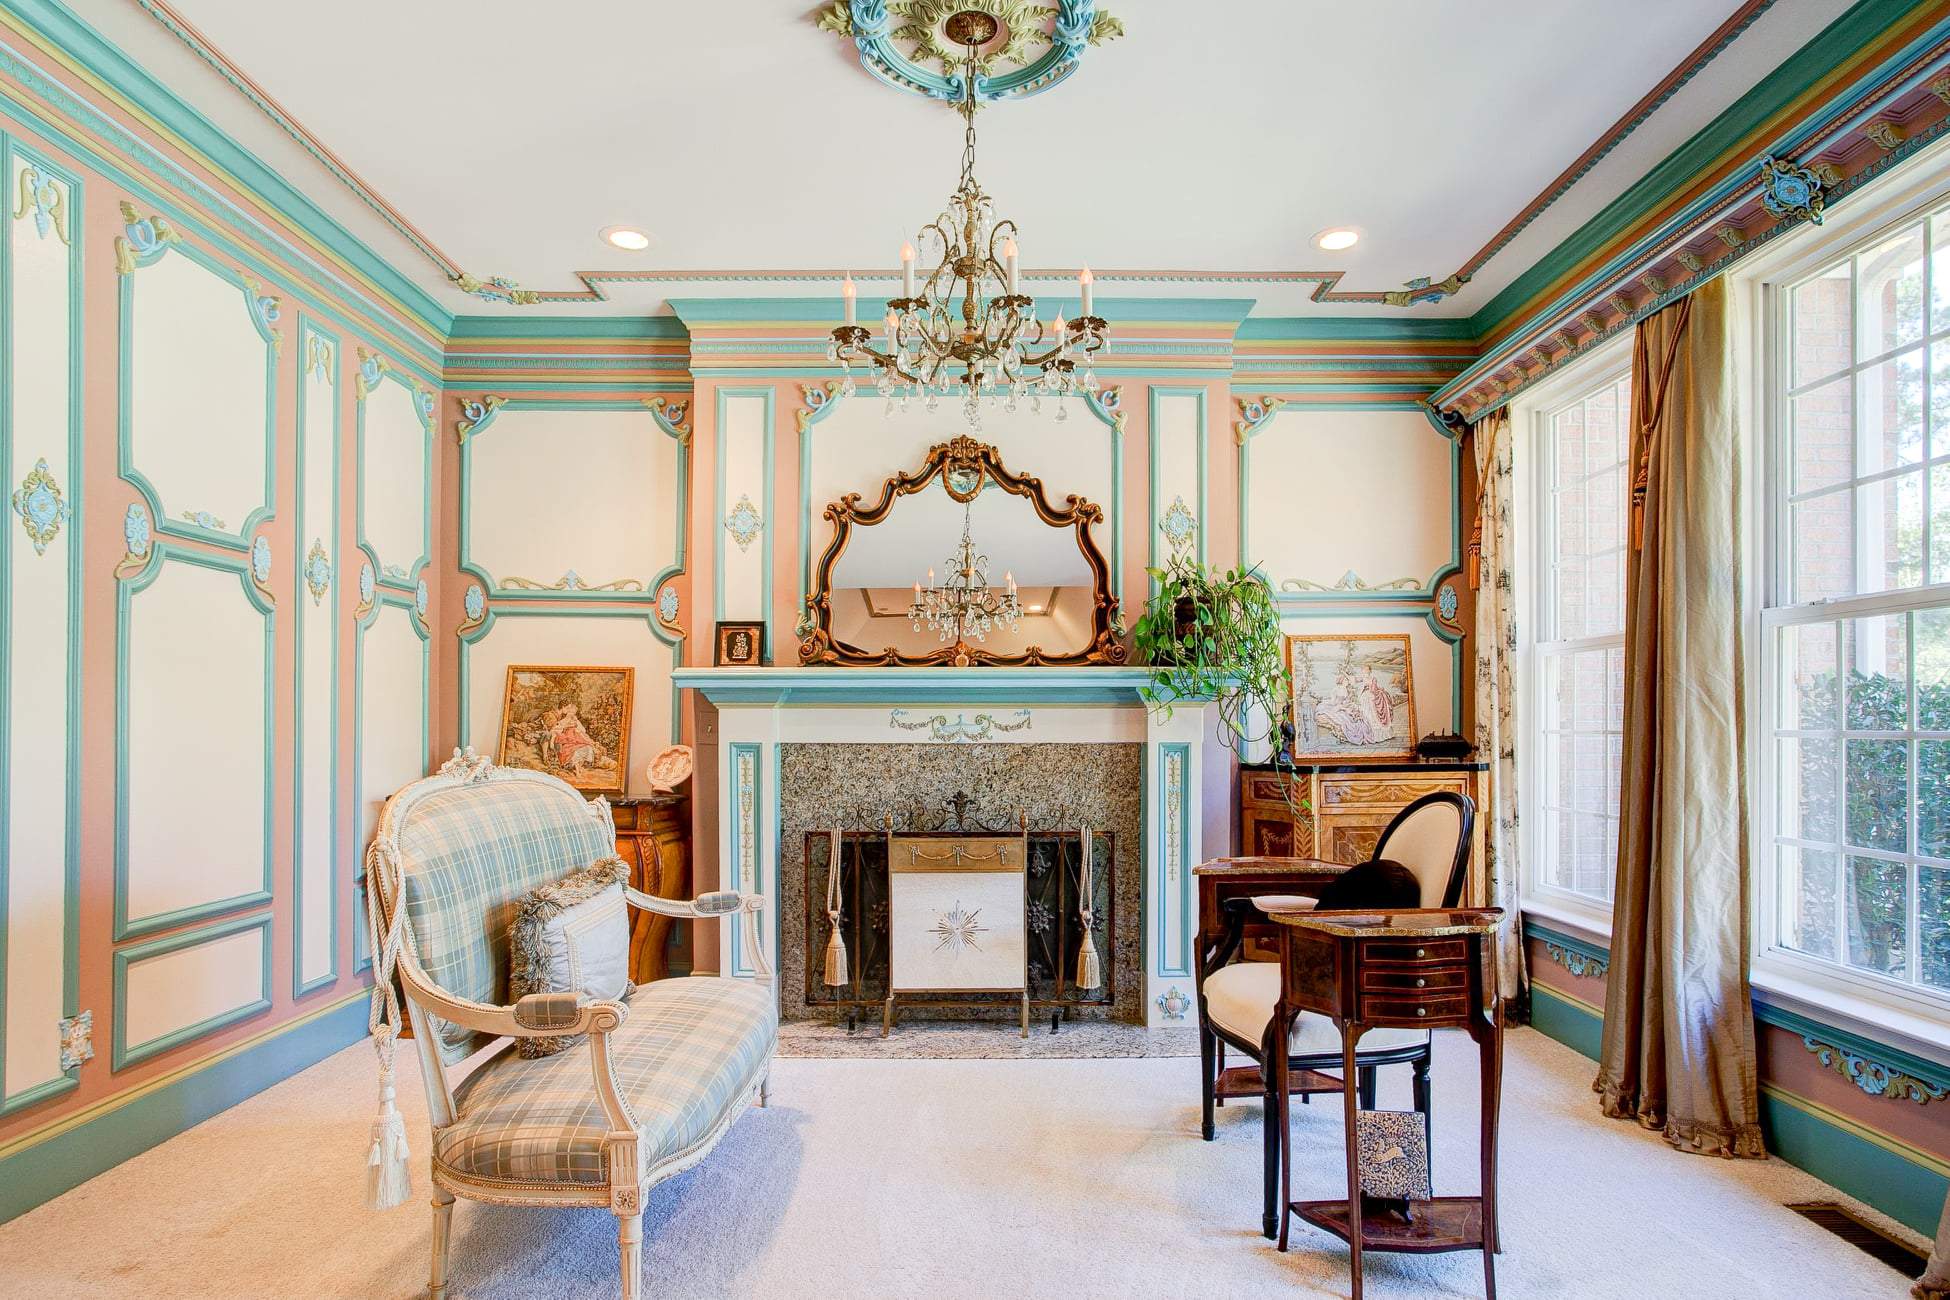 South Carolina; Gena Banks realtor; interior designed and painted by homeowner